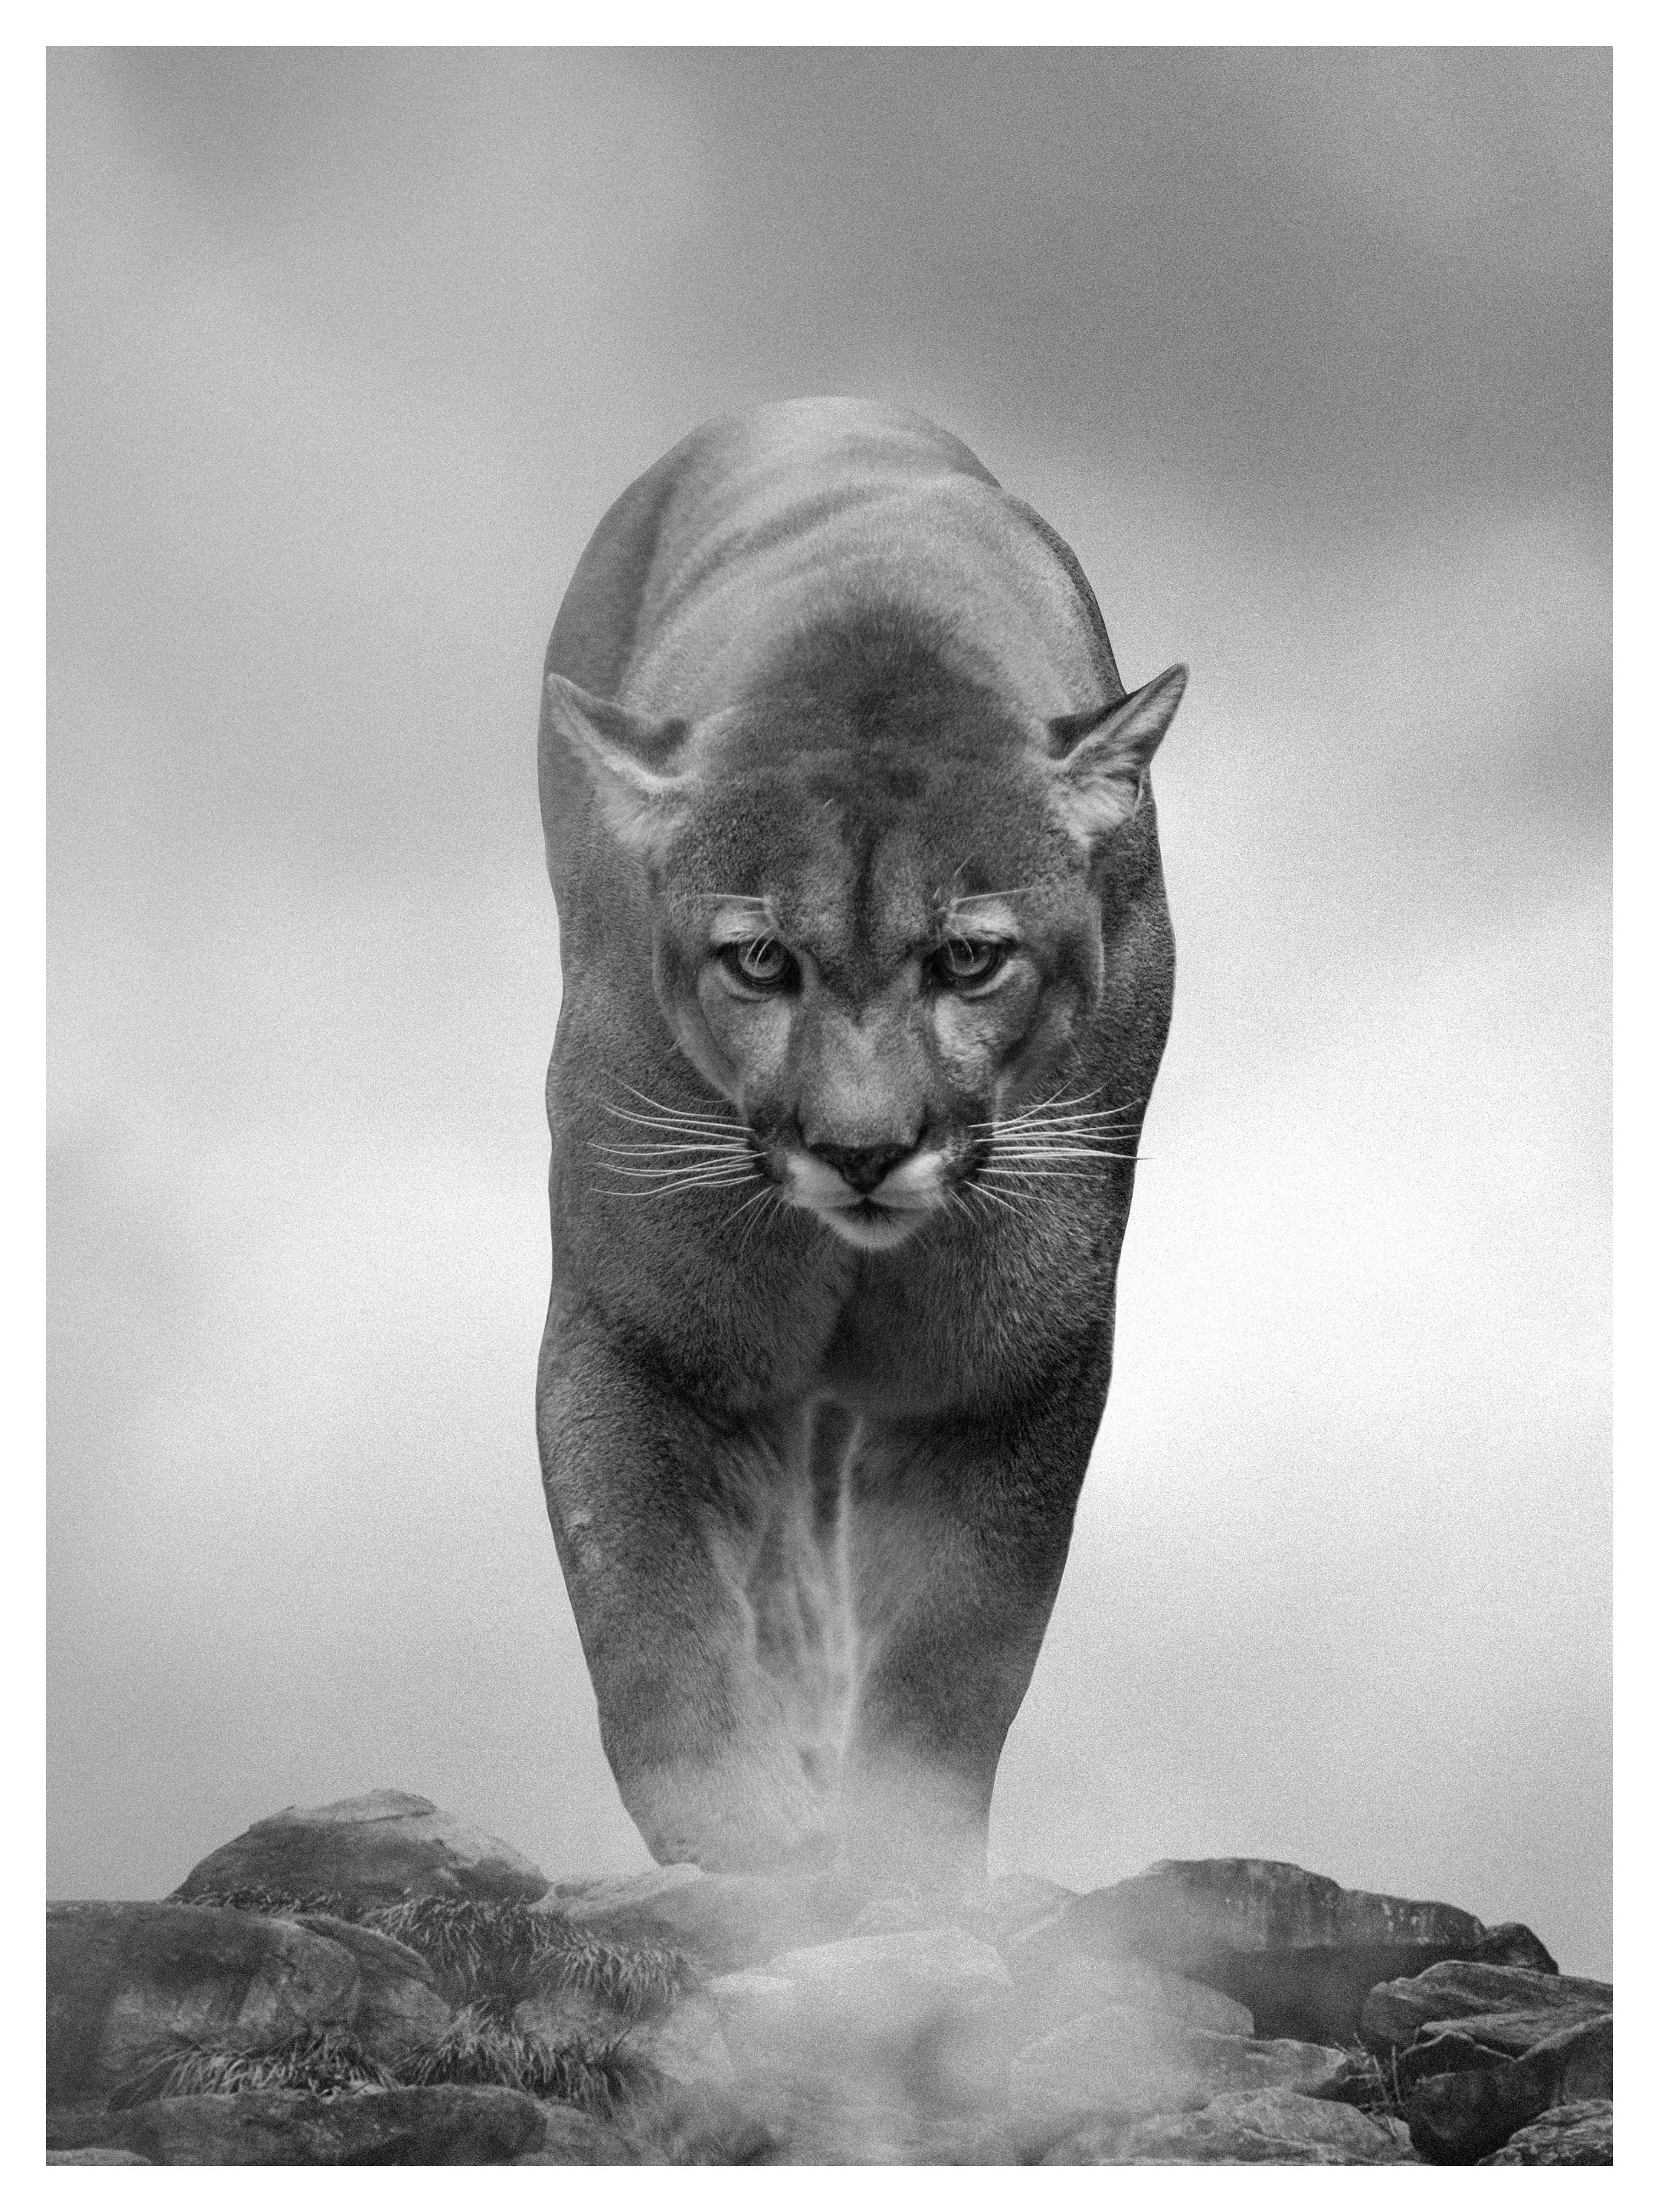 Shane Russeck Landscape Photograph -  36x48 Unsigned Test Print  Photography, Cougar, Mountain Lion Western Art